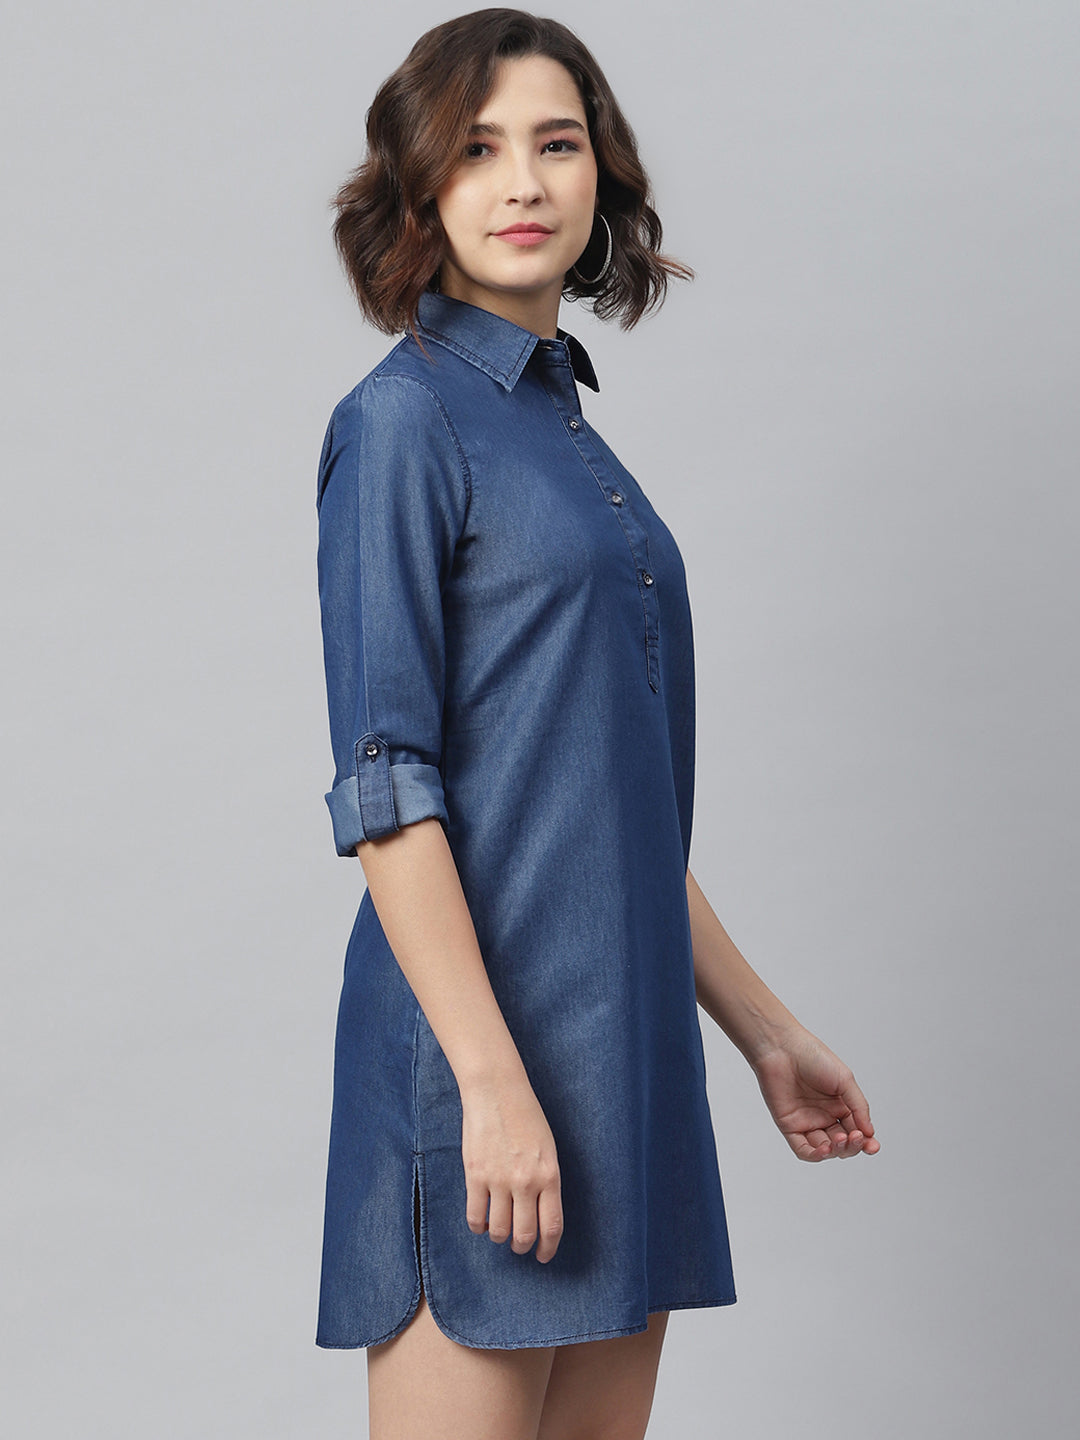 Buy StyleStone Women's Denim Shirt Style Front Button Dress Blue at  Amazon.in